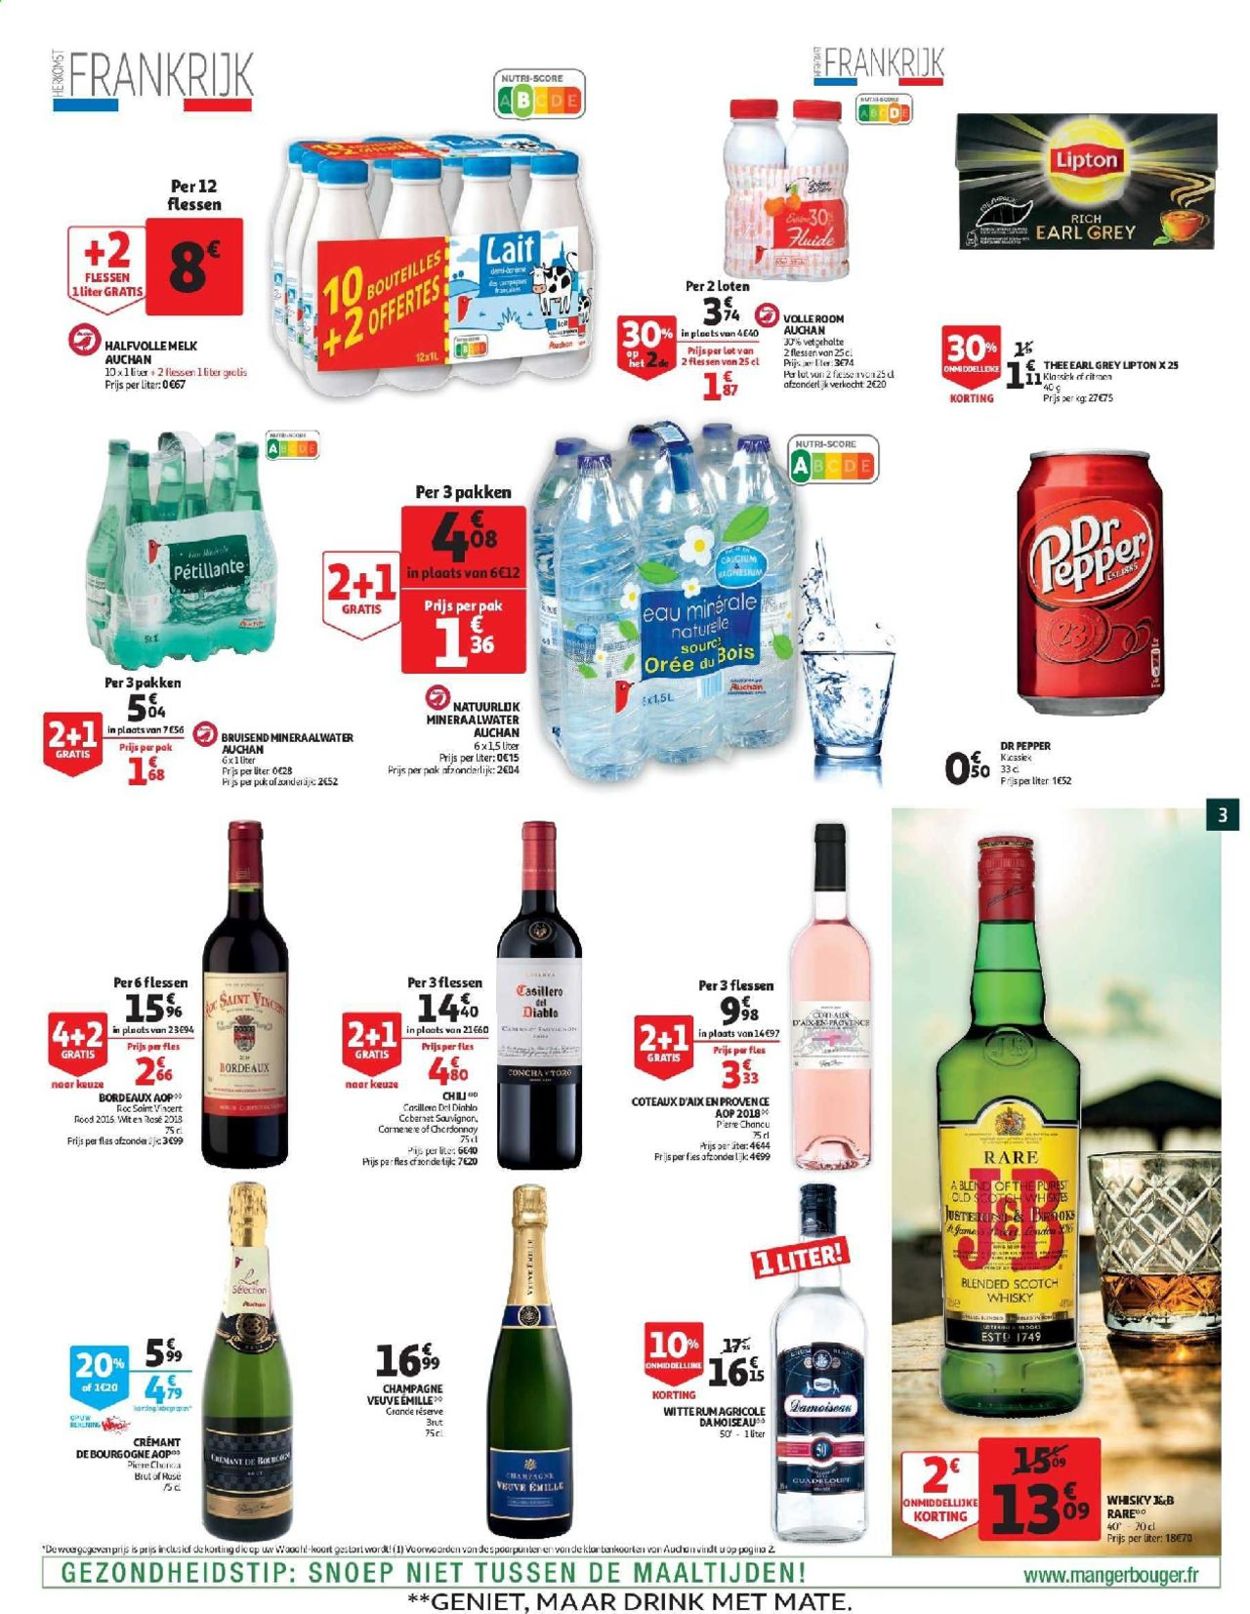 Auchan Catalogue - 26.06-02.07.2019 (Page 3)